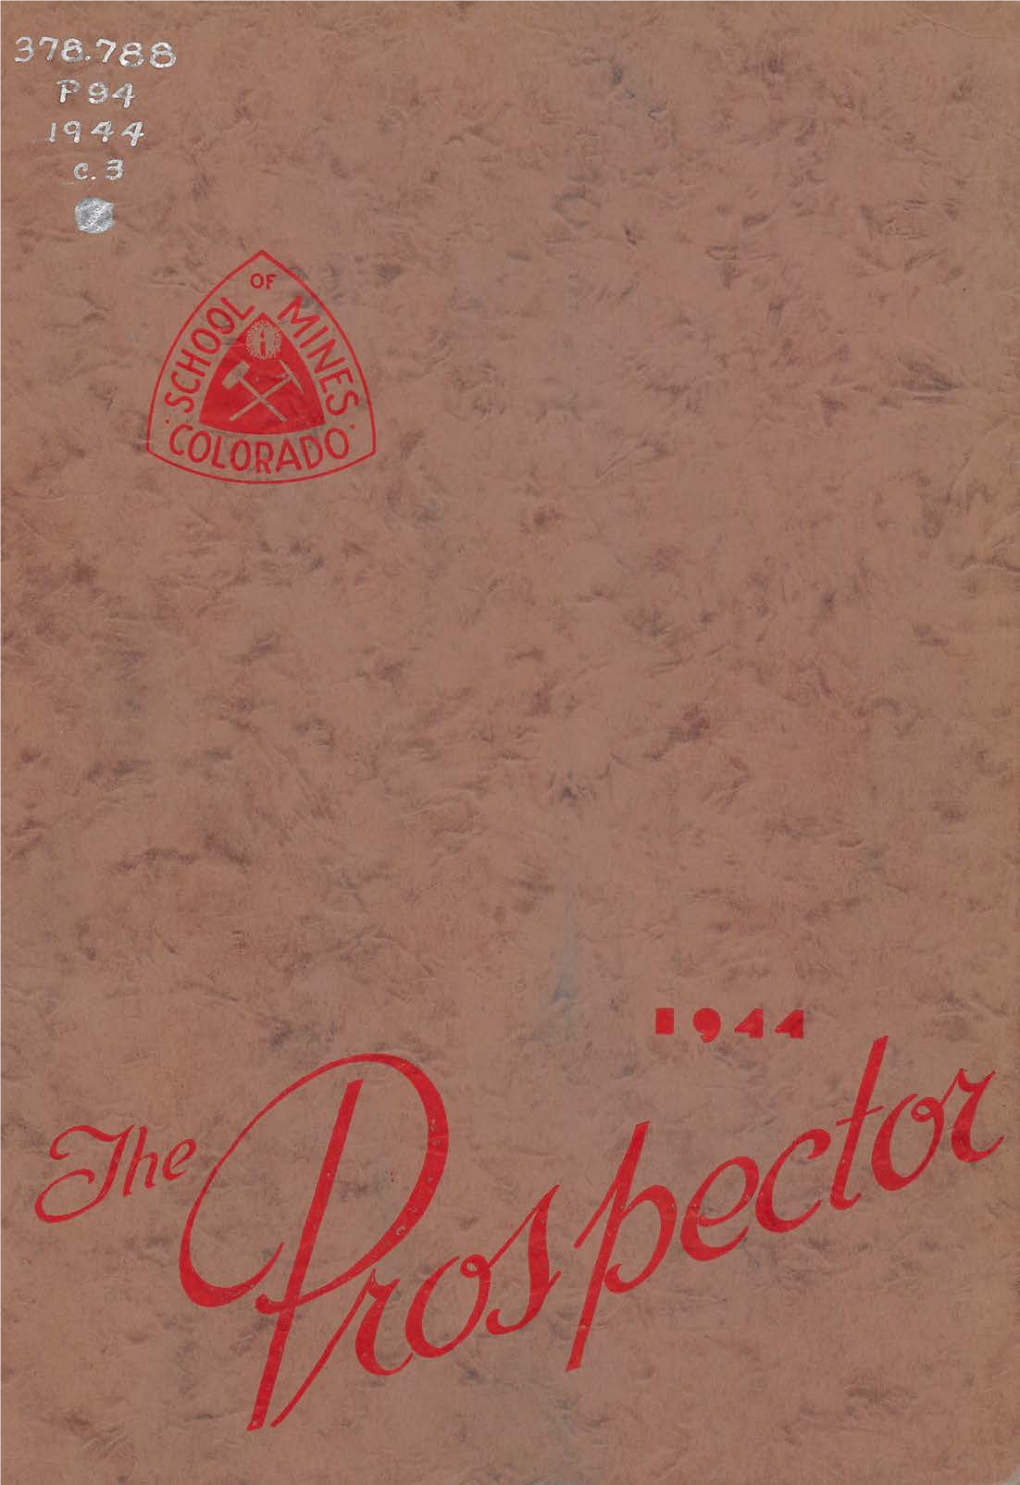 Prospector 1944.Pdf (7.891Mb)